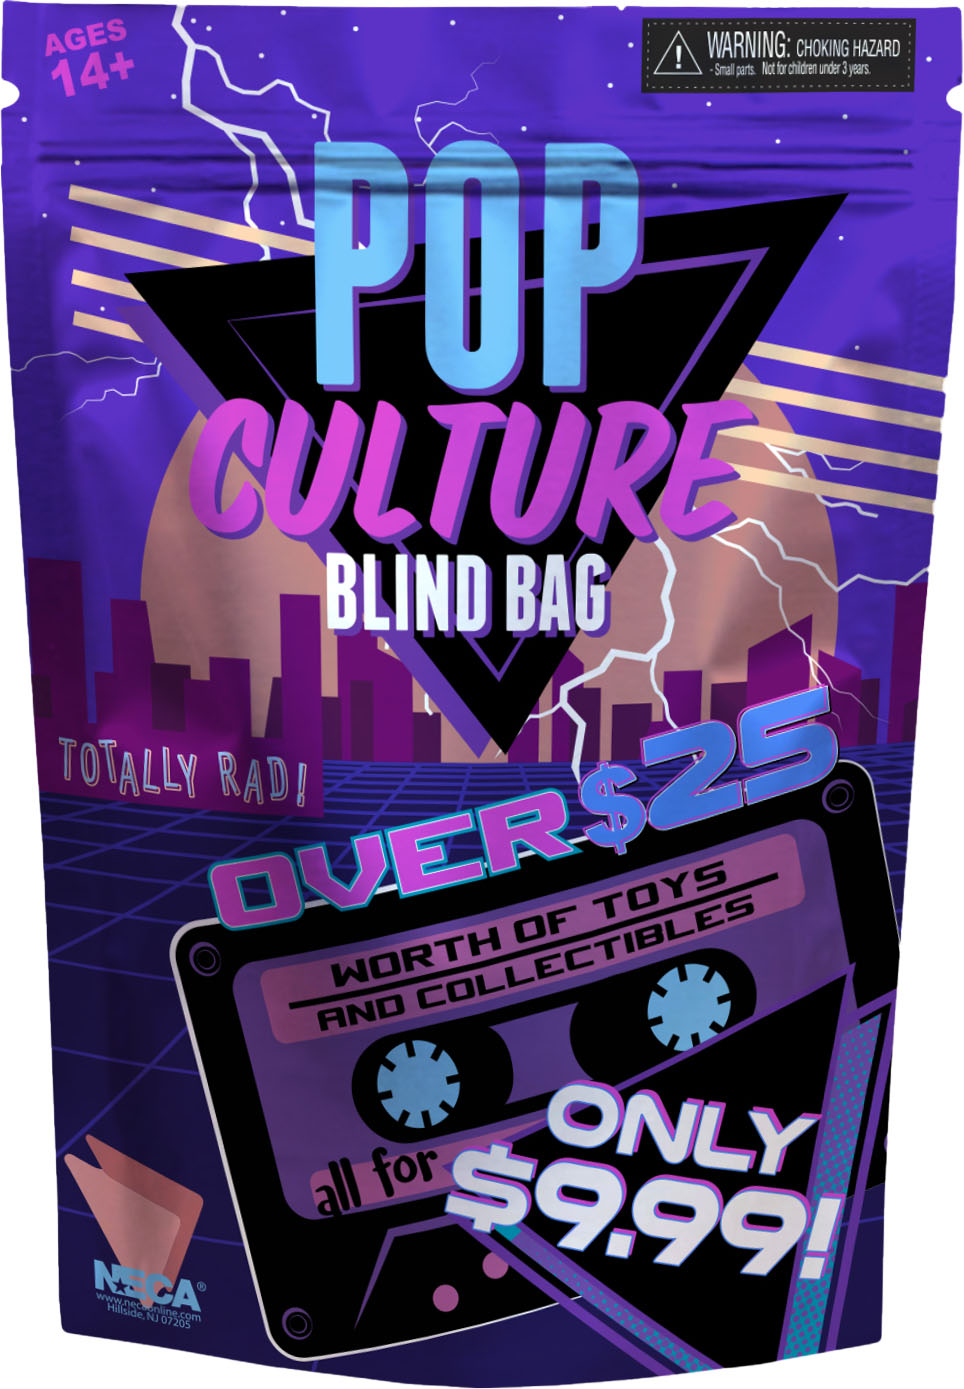 NECA Pop Culture Blind Bag 02113 - Best Buy